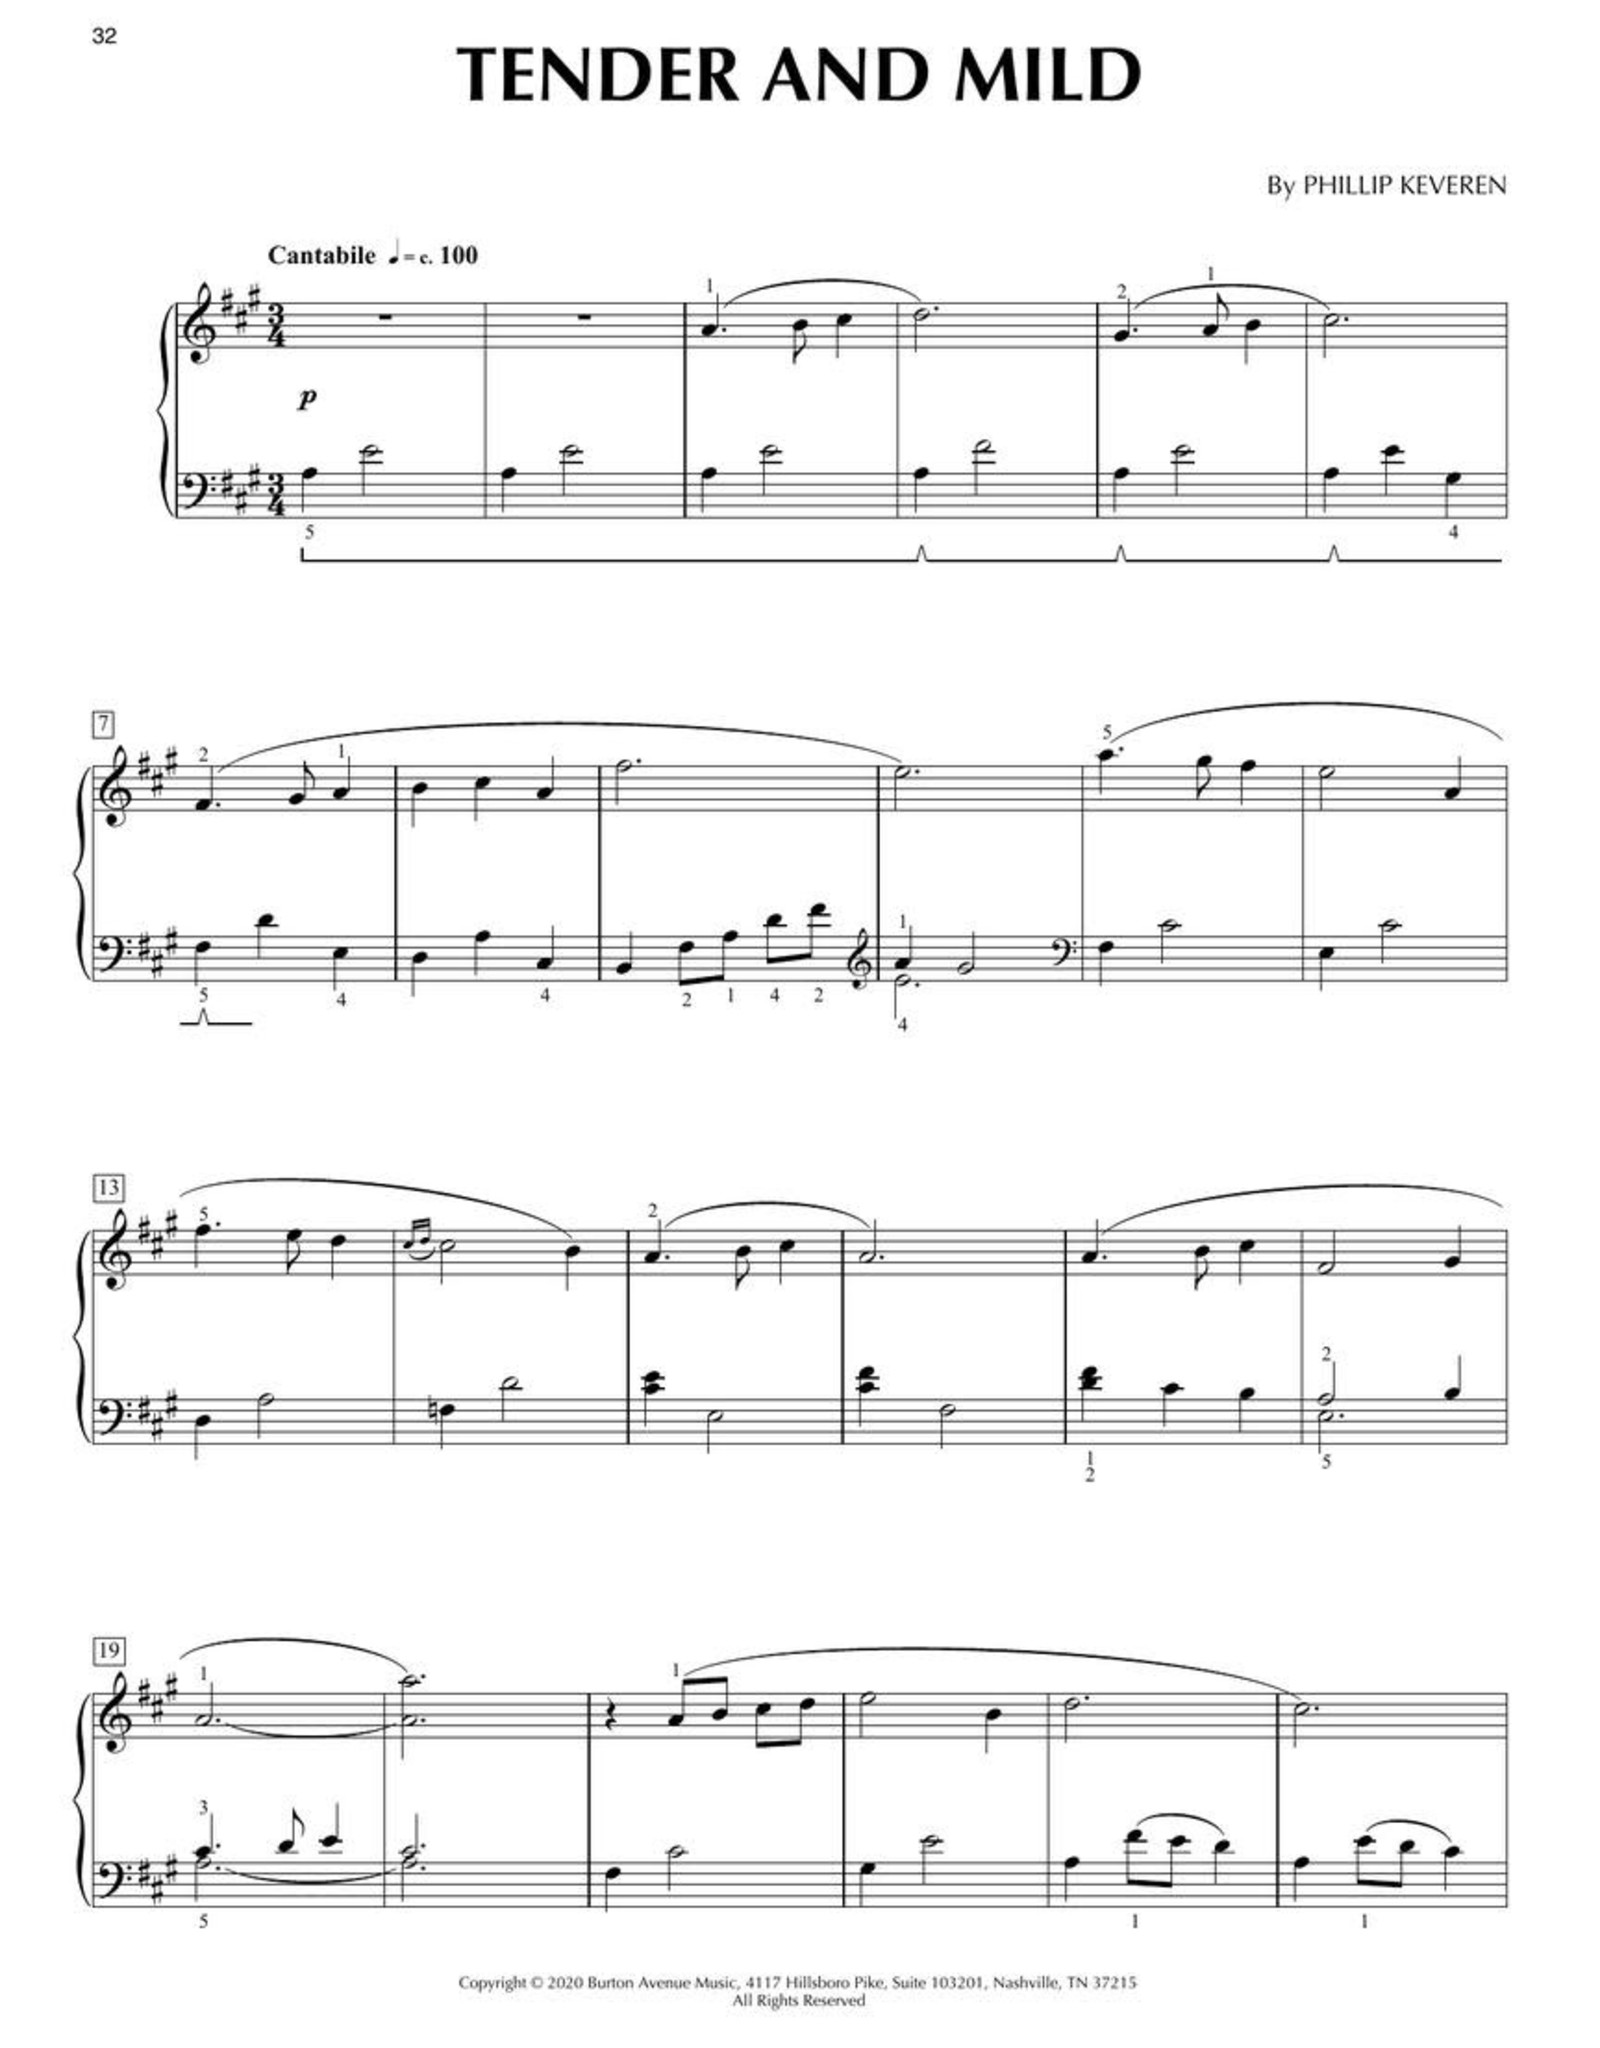 Hal Leonard Piano Calm Christmas arr. Phillip Keveren